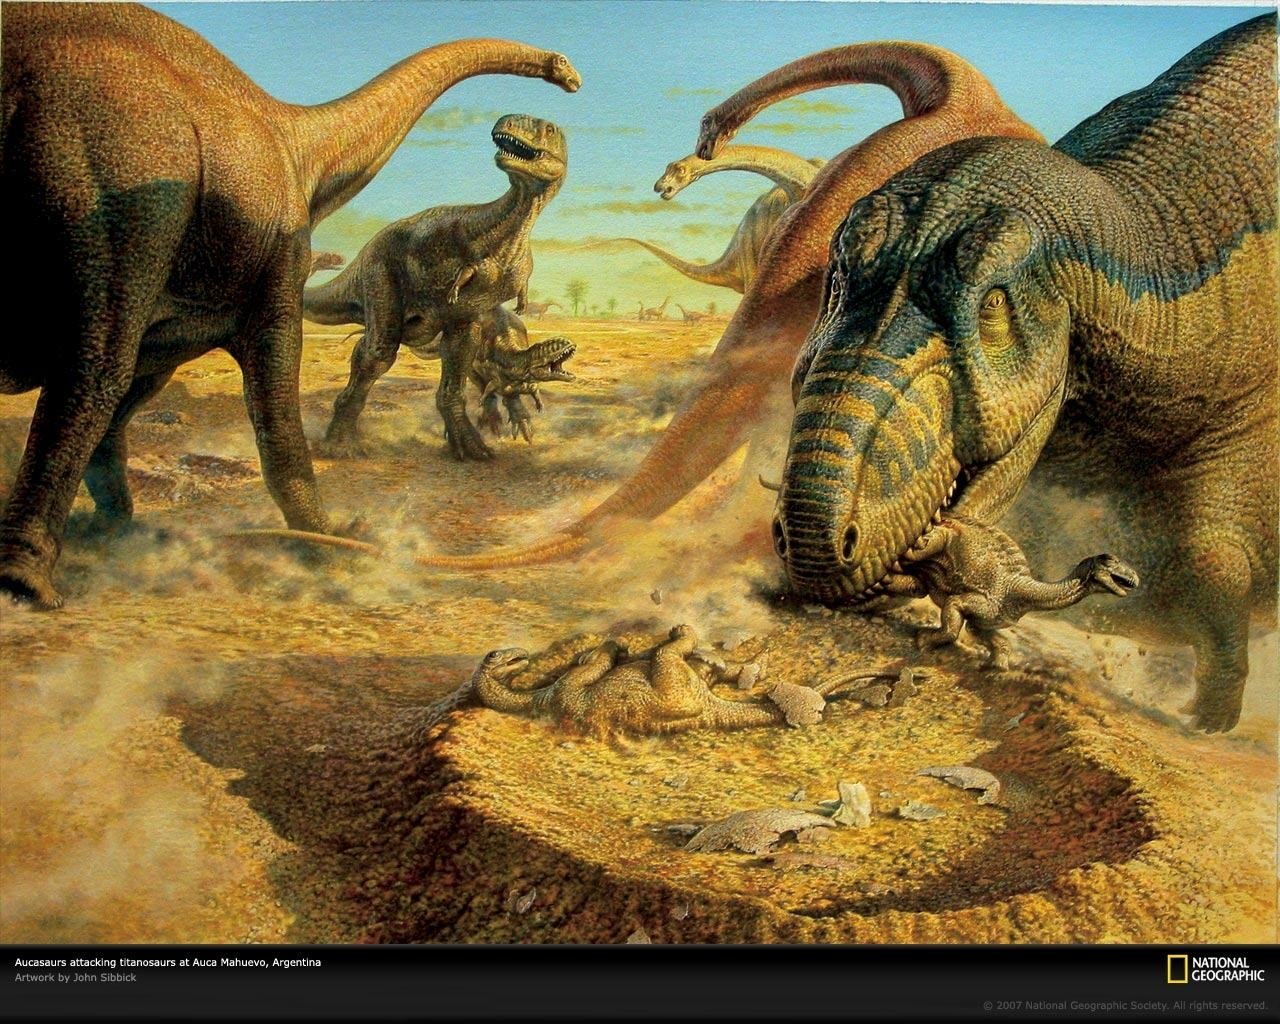 Wallpapers Backgrounds   Dinosaur wallpaper dinosaurs kids Magazines